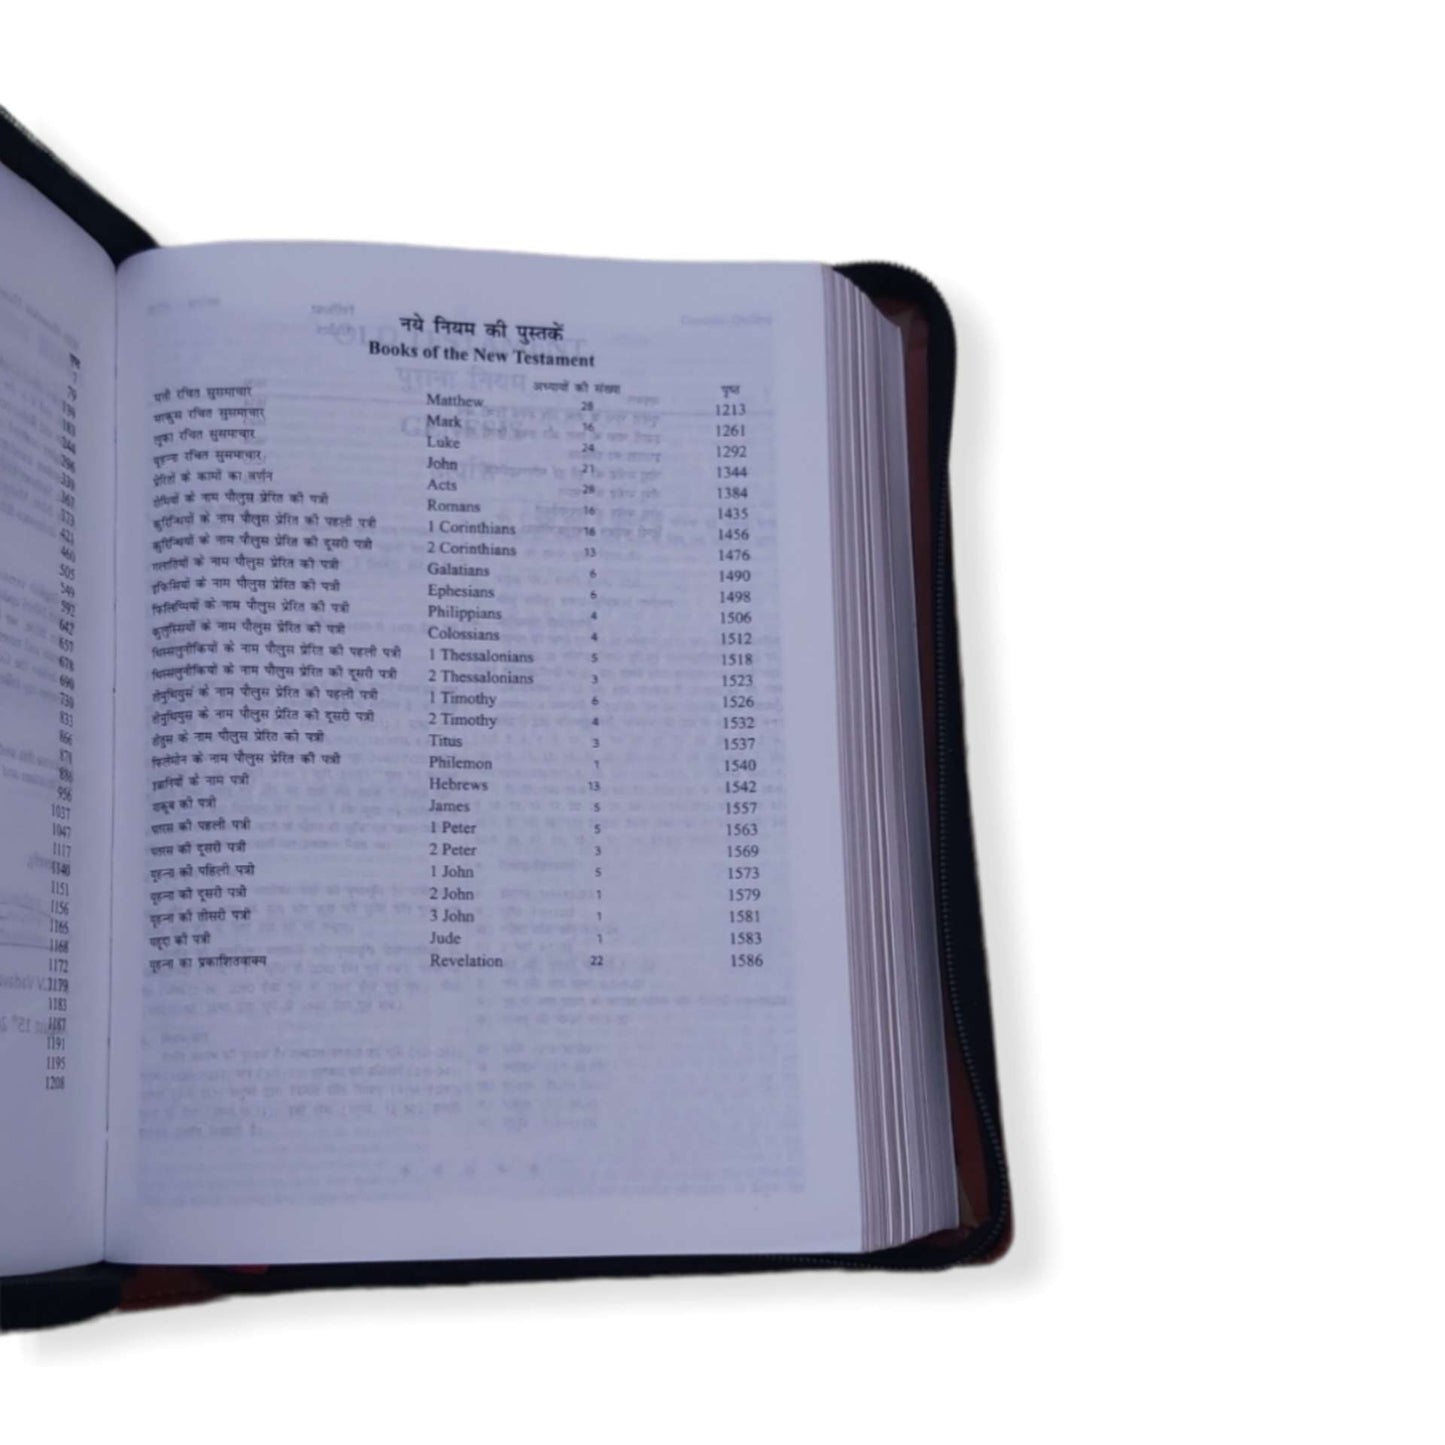 The Holy English & Hindi Sathyam Bilingual Bible , Black Clour